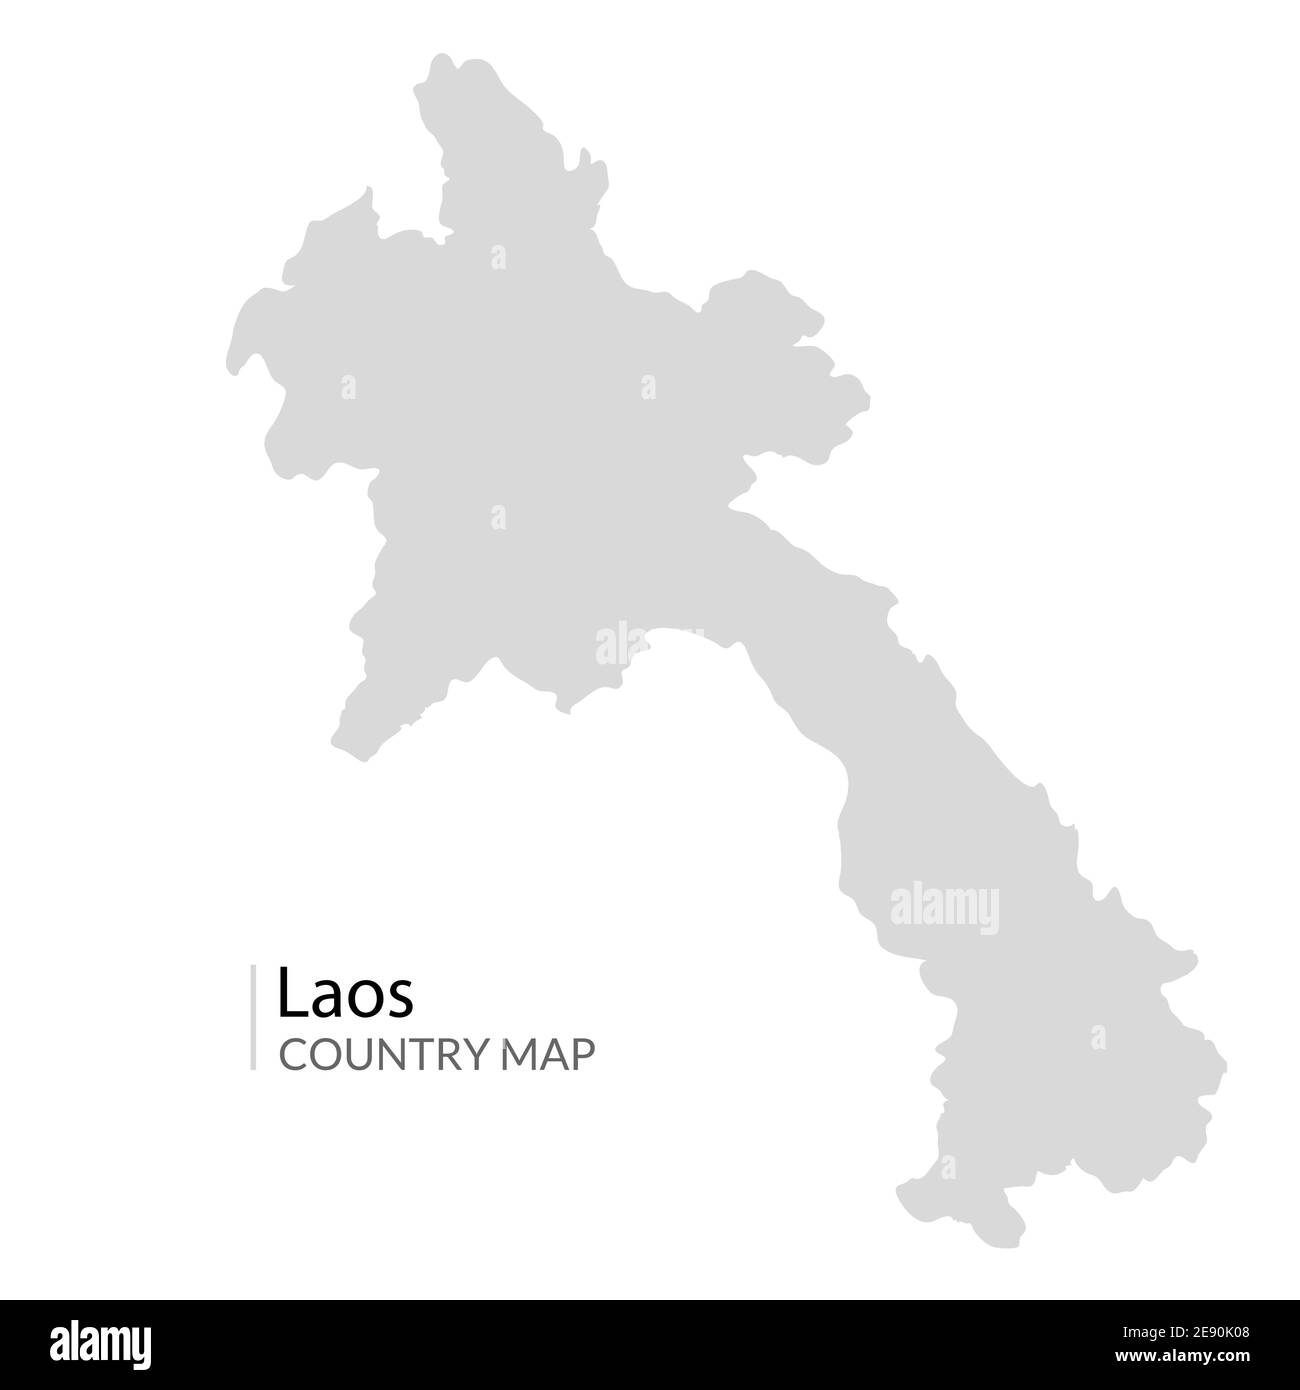 Laos vector map country. Laos near vietnam lao asia region map Stock Vector